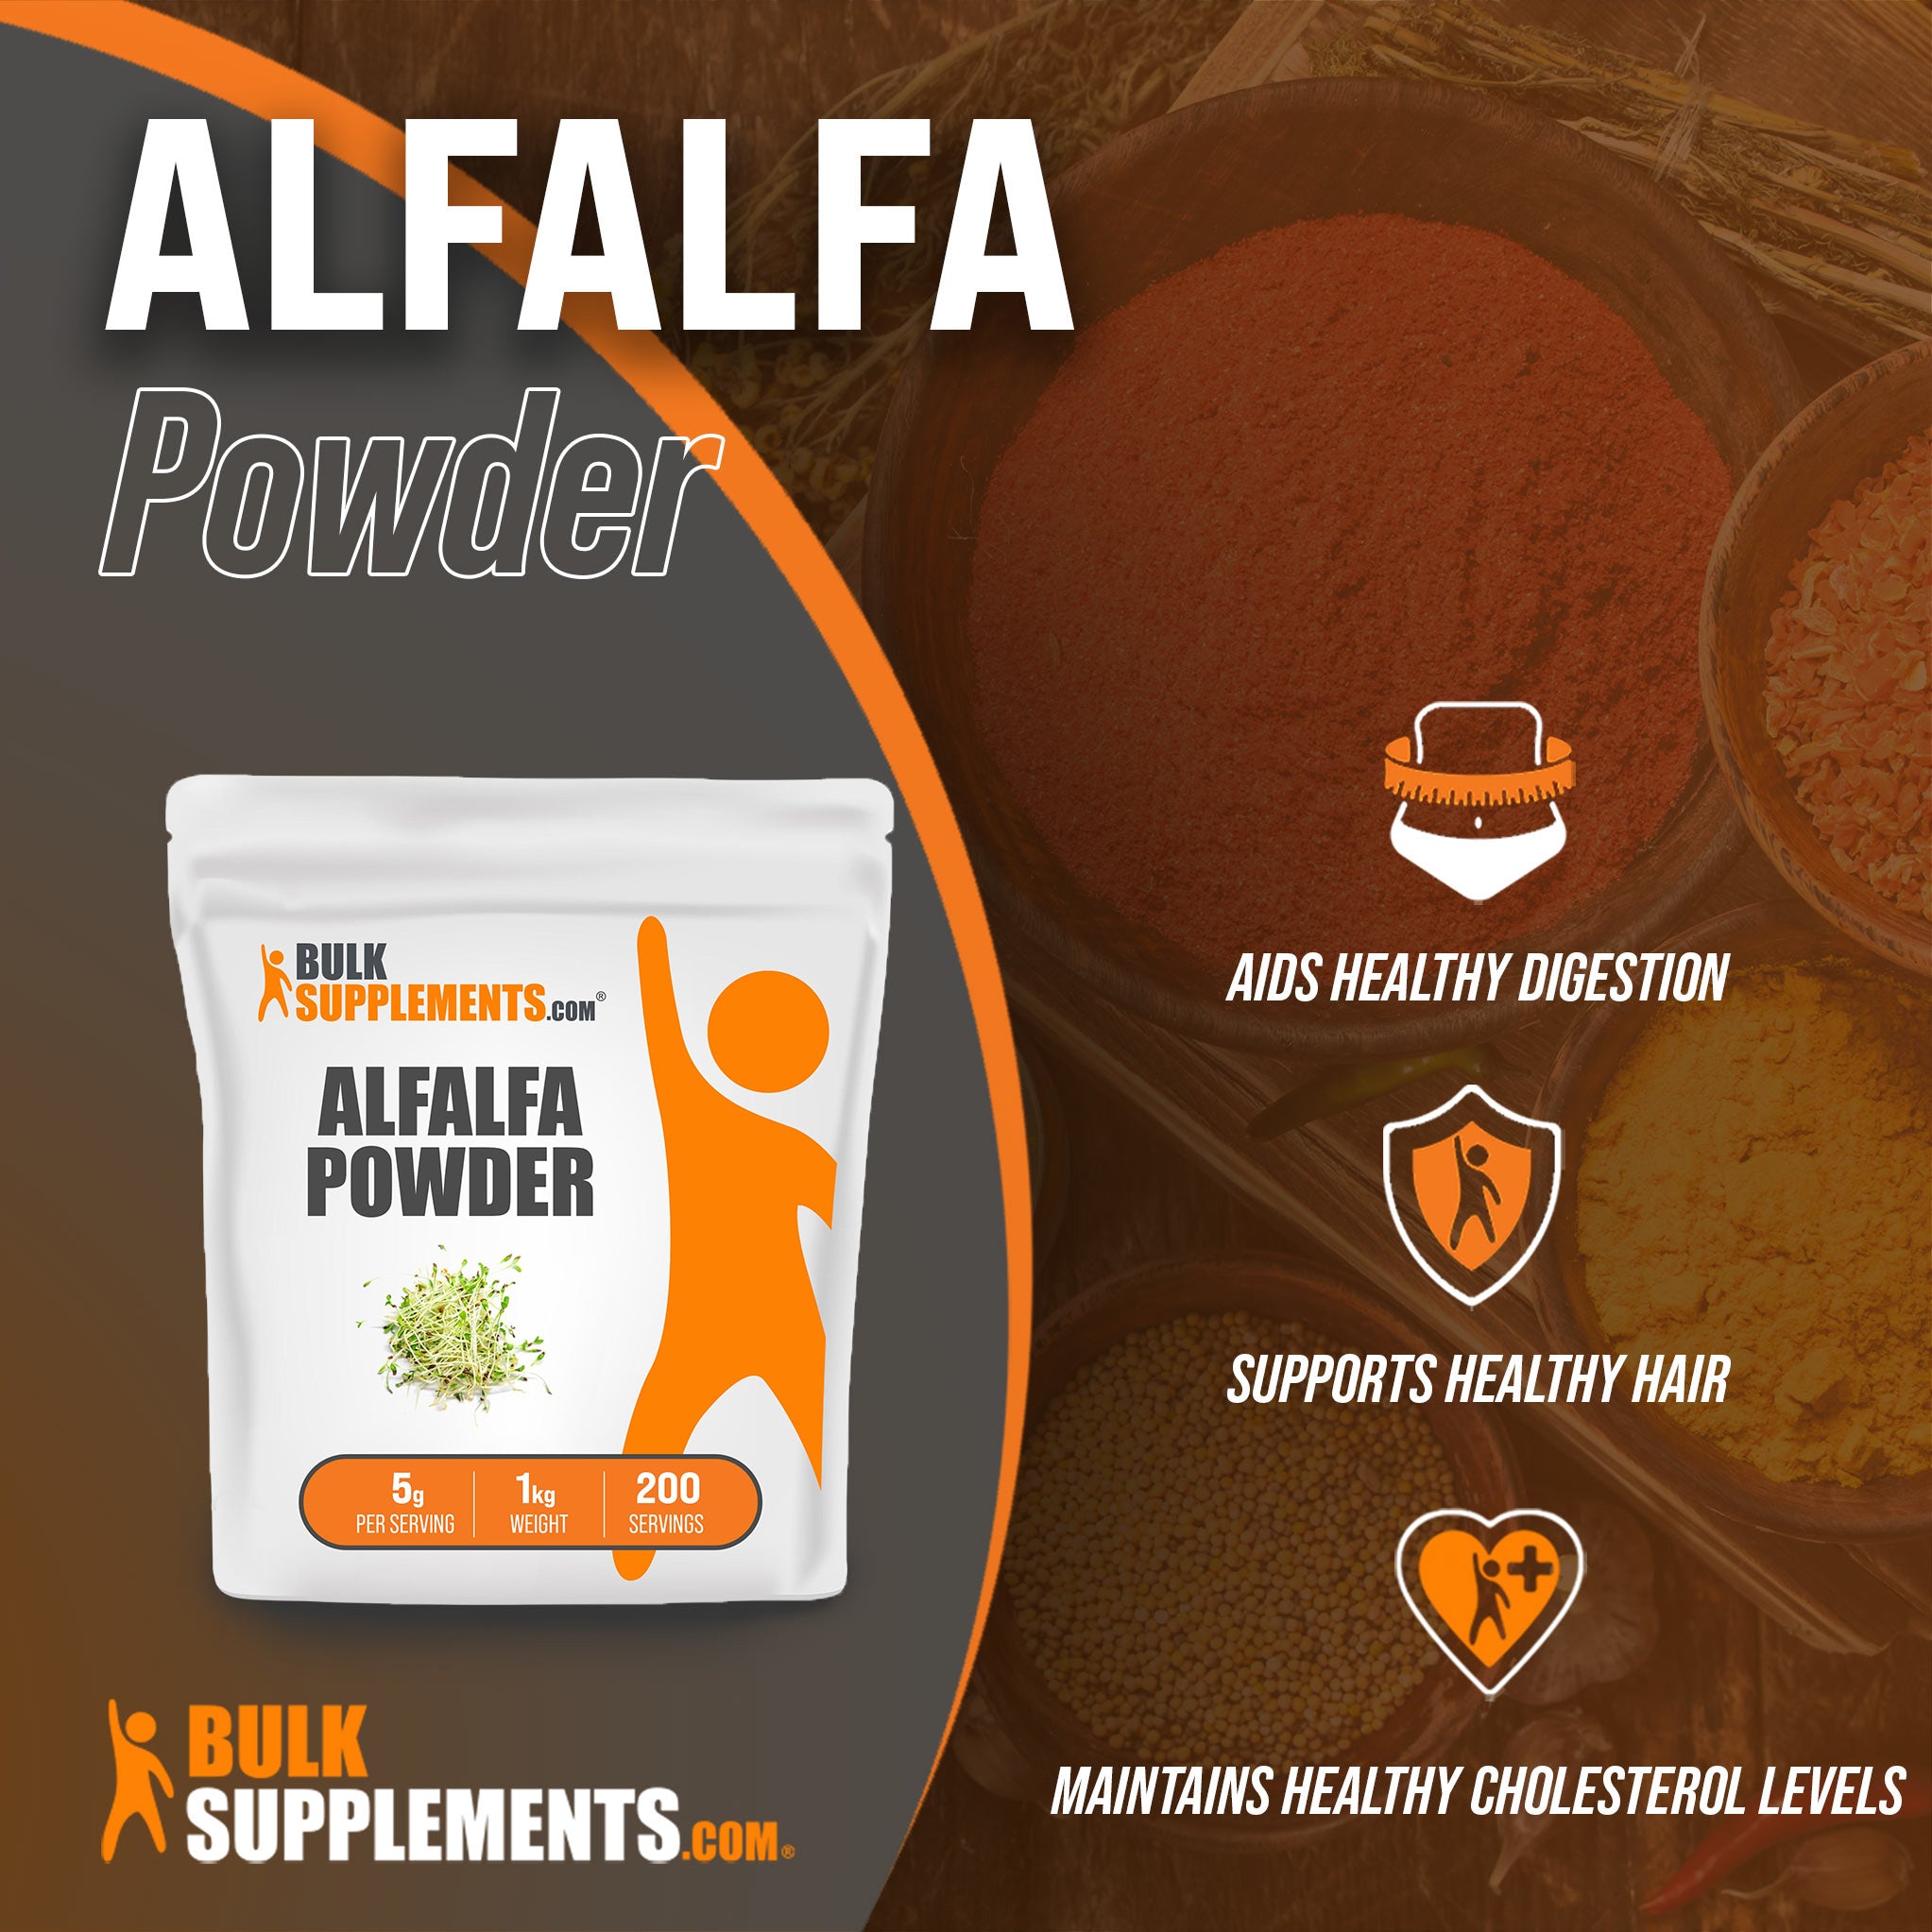 Alfalfa Powder for healthy hair, digestion and cholesterol